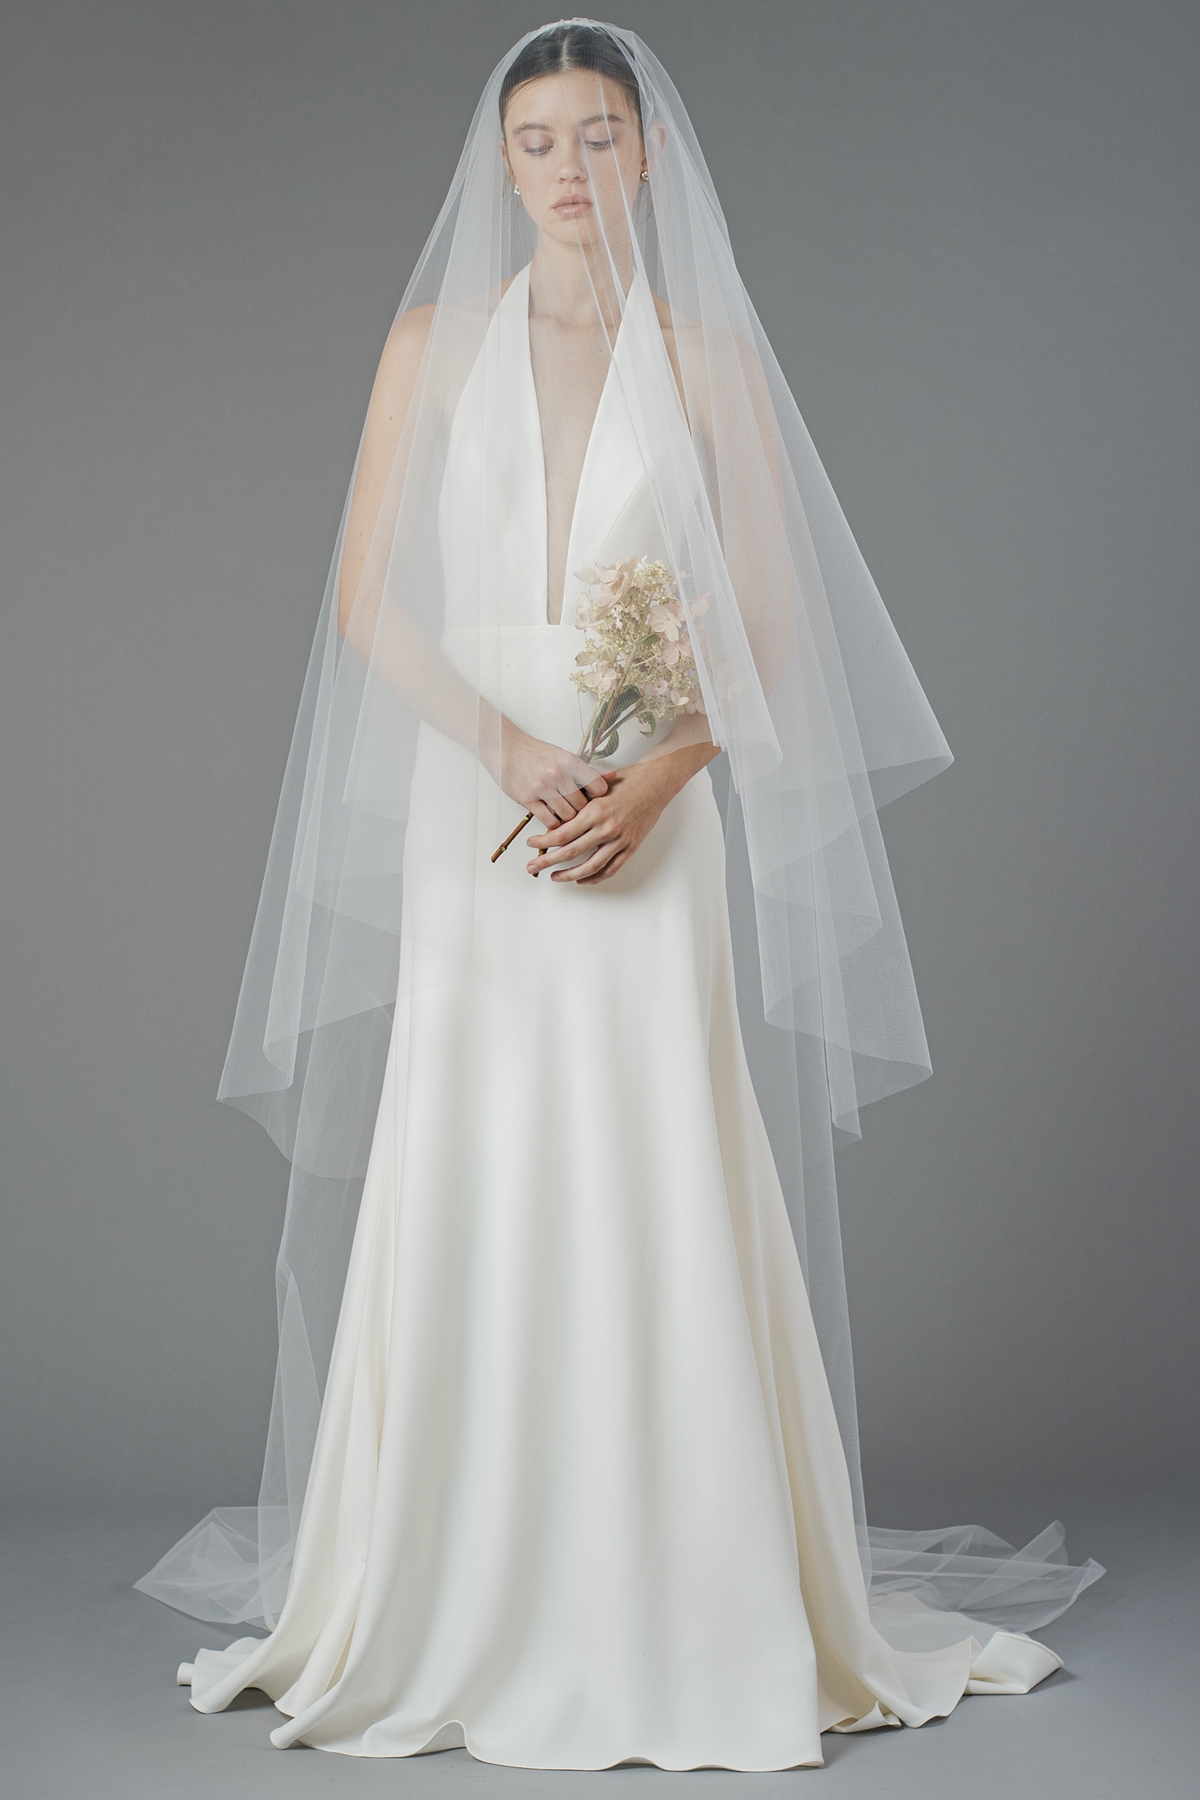 bridesmaid dresses silver sage